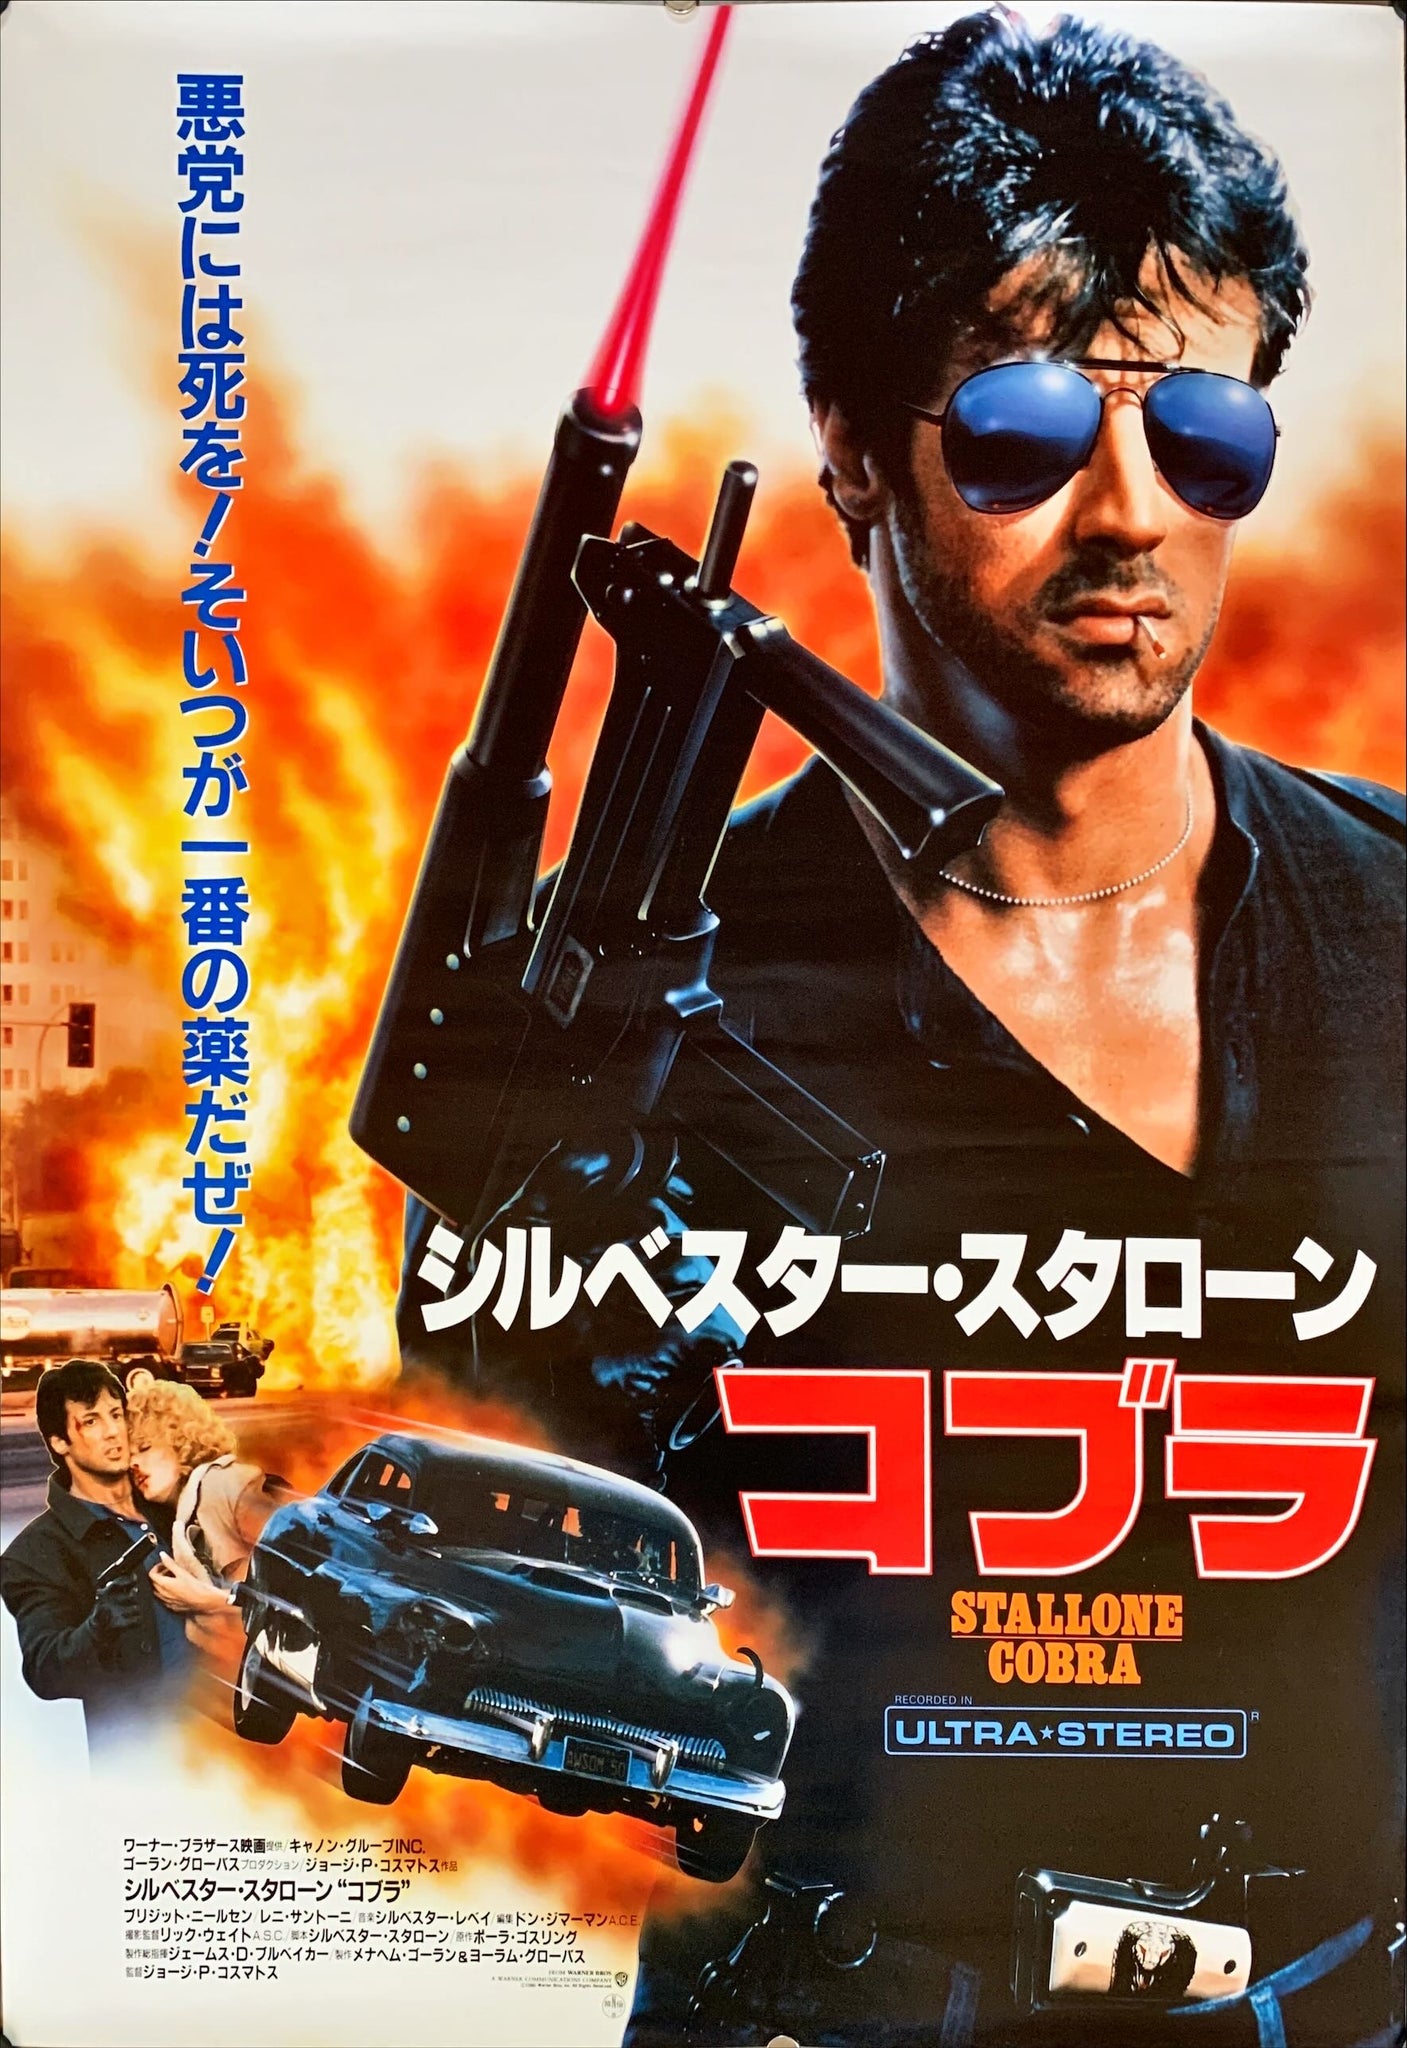 Cobra, Original Release Japanese Movie Poster 1986, B2 Size (51 x